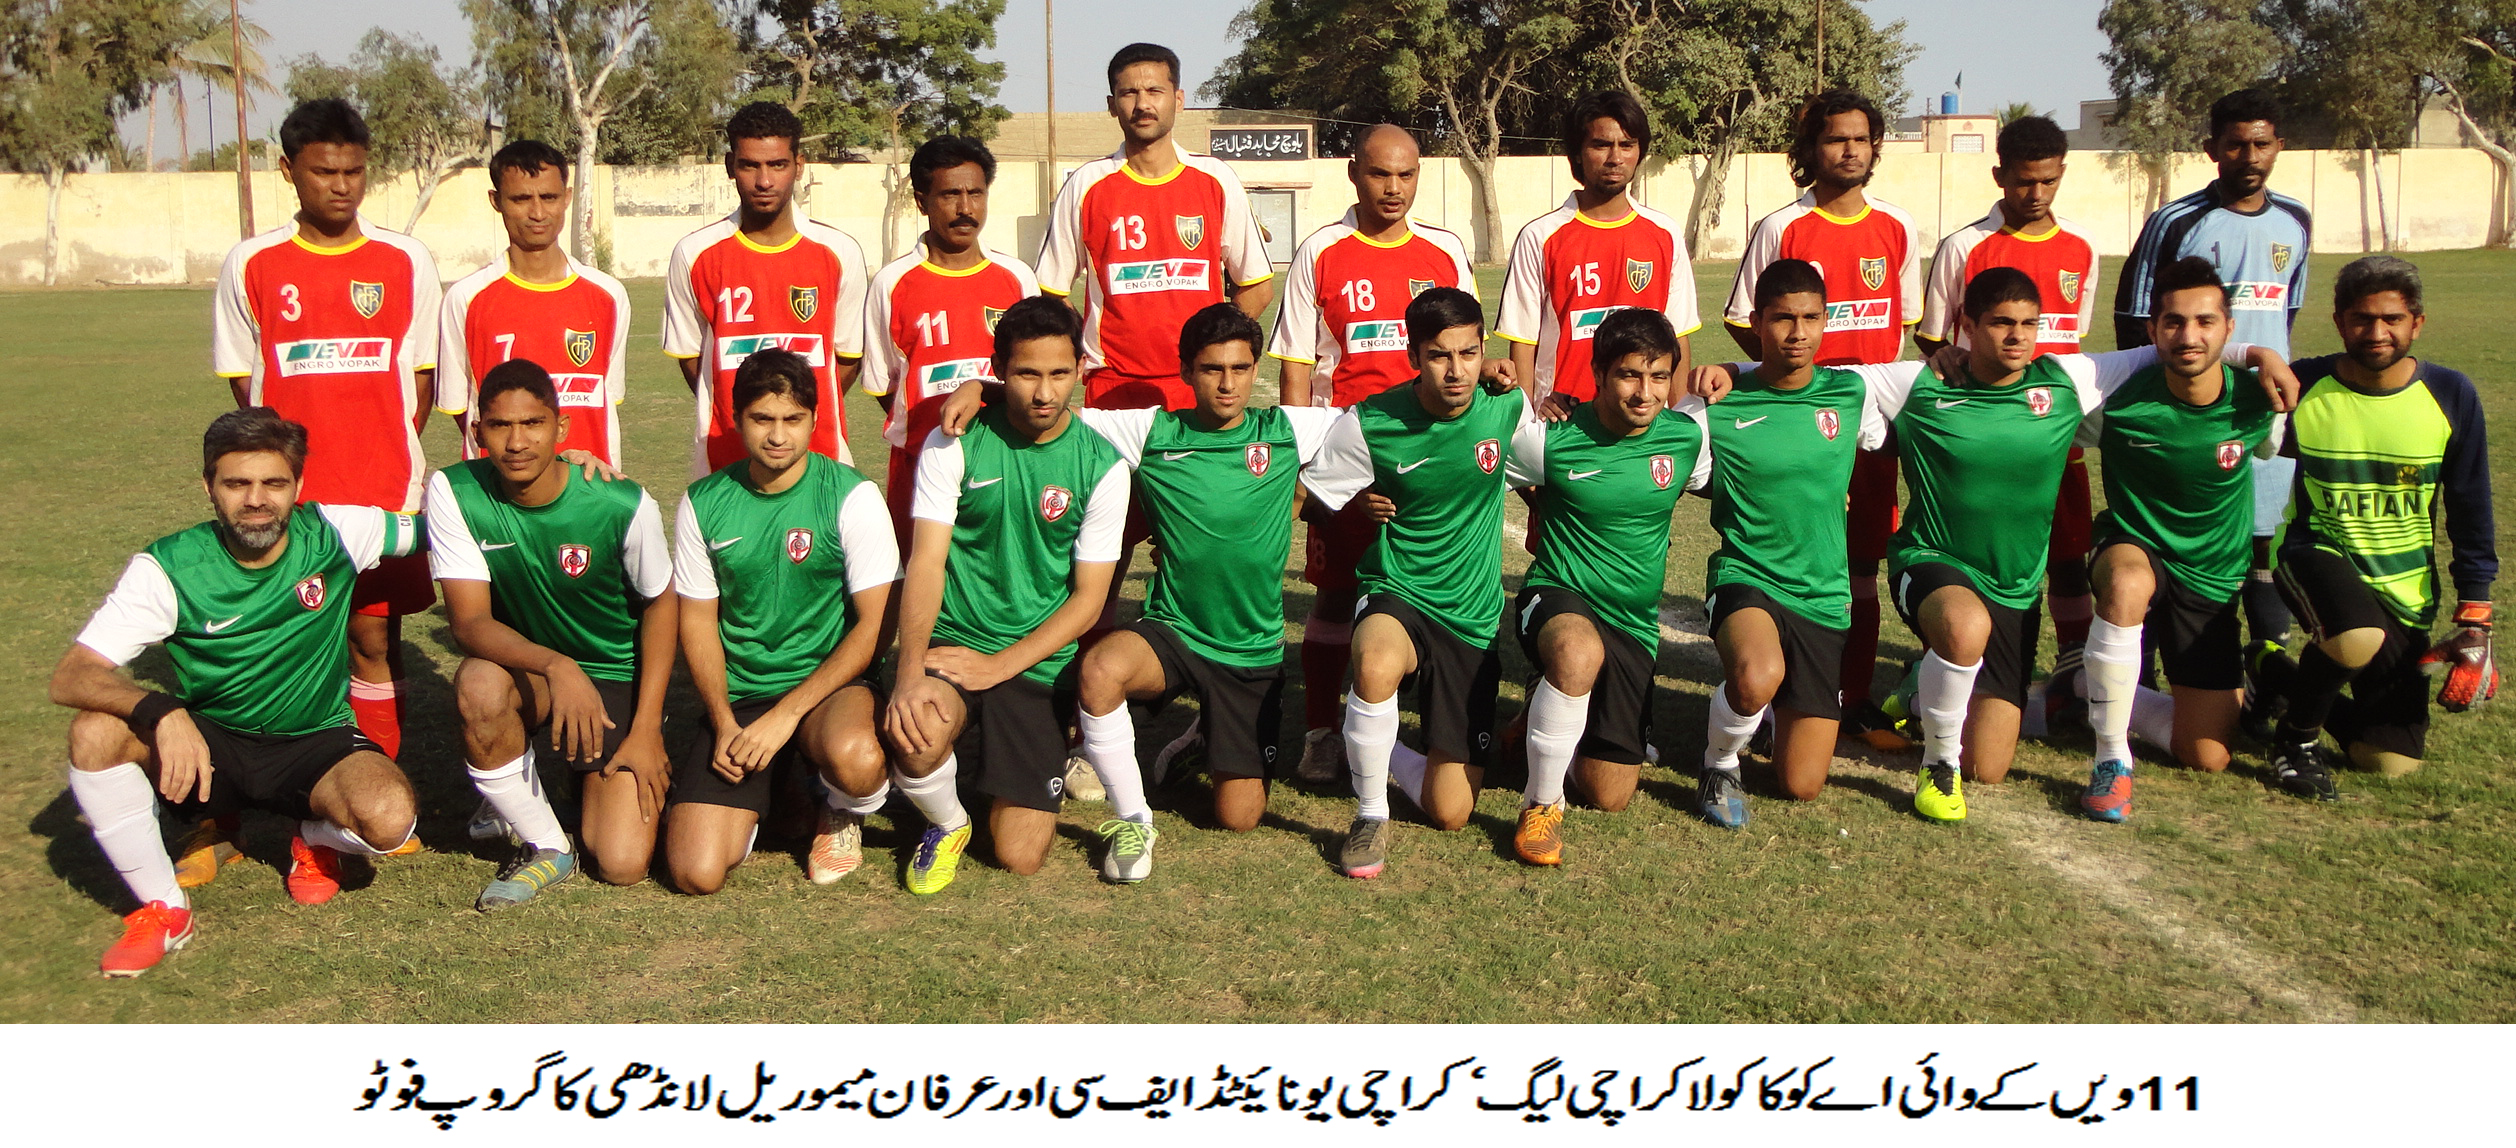 COCA COLA KARACHI FOOTBALL LEAGUE 2014: Karachi United secure sensational win while Baloch Youth Malir and Gulistan Friends Korangi share points